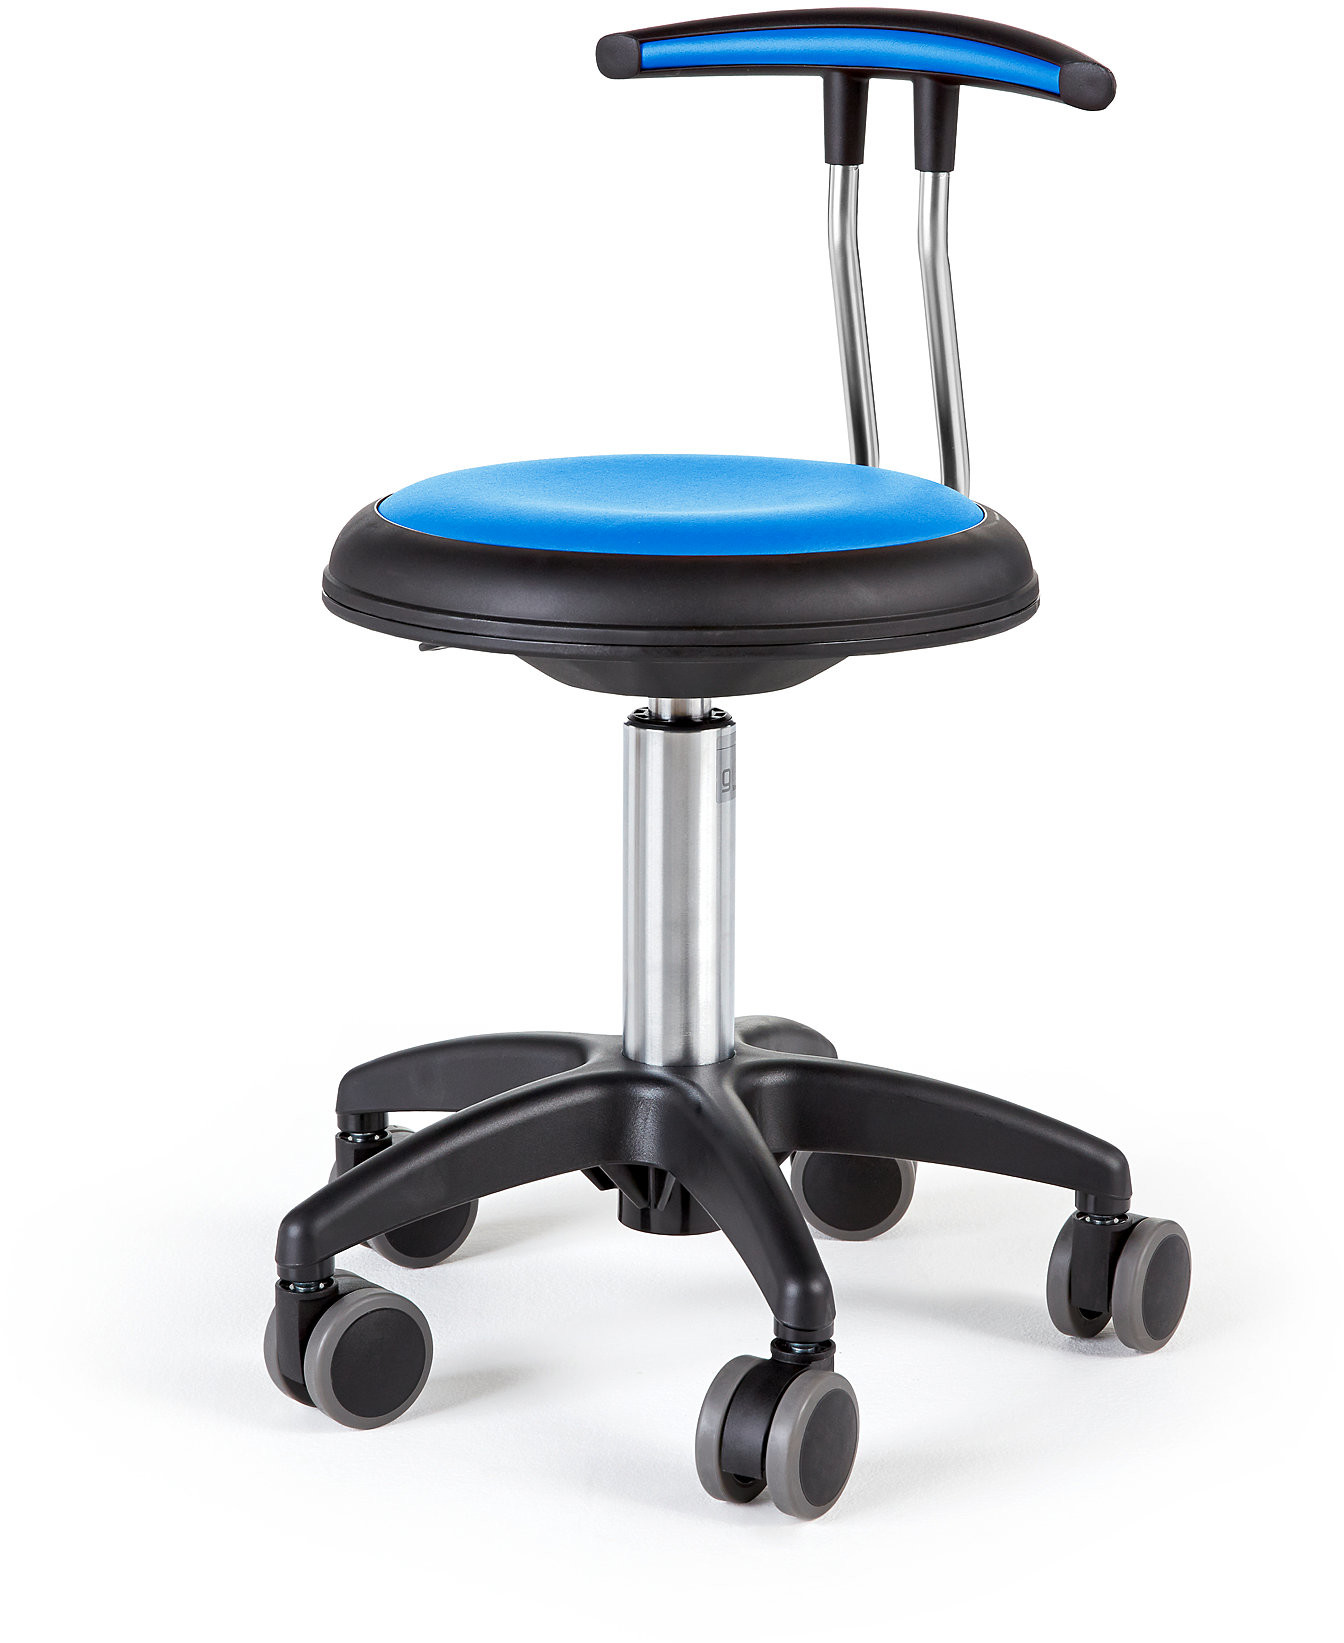 AJ Produkty e- Wheel stool Star seat height 380-480 mm. in blue leather.